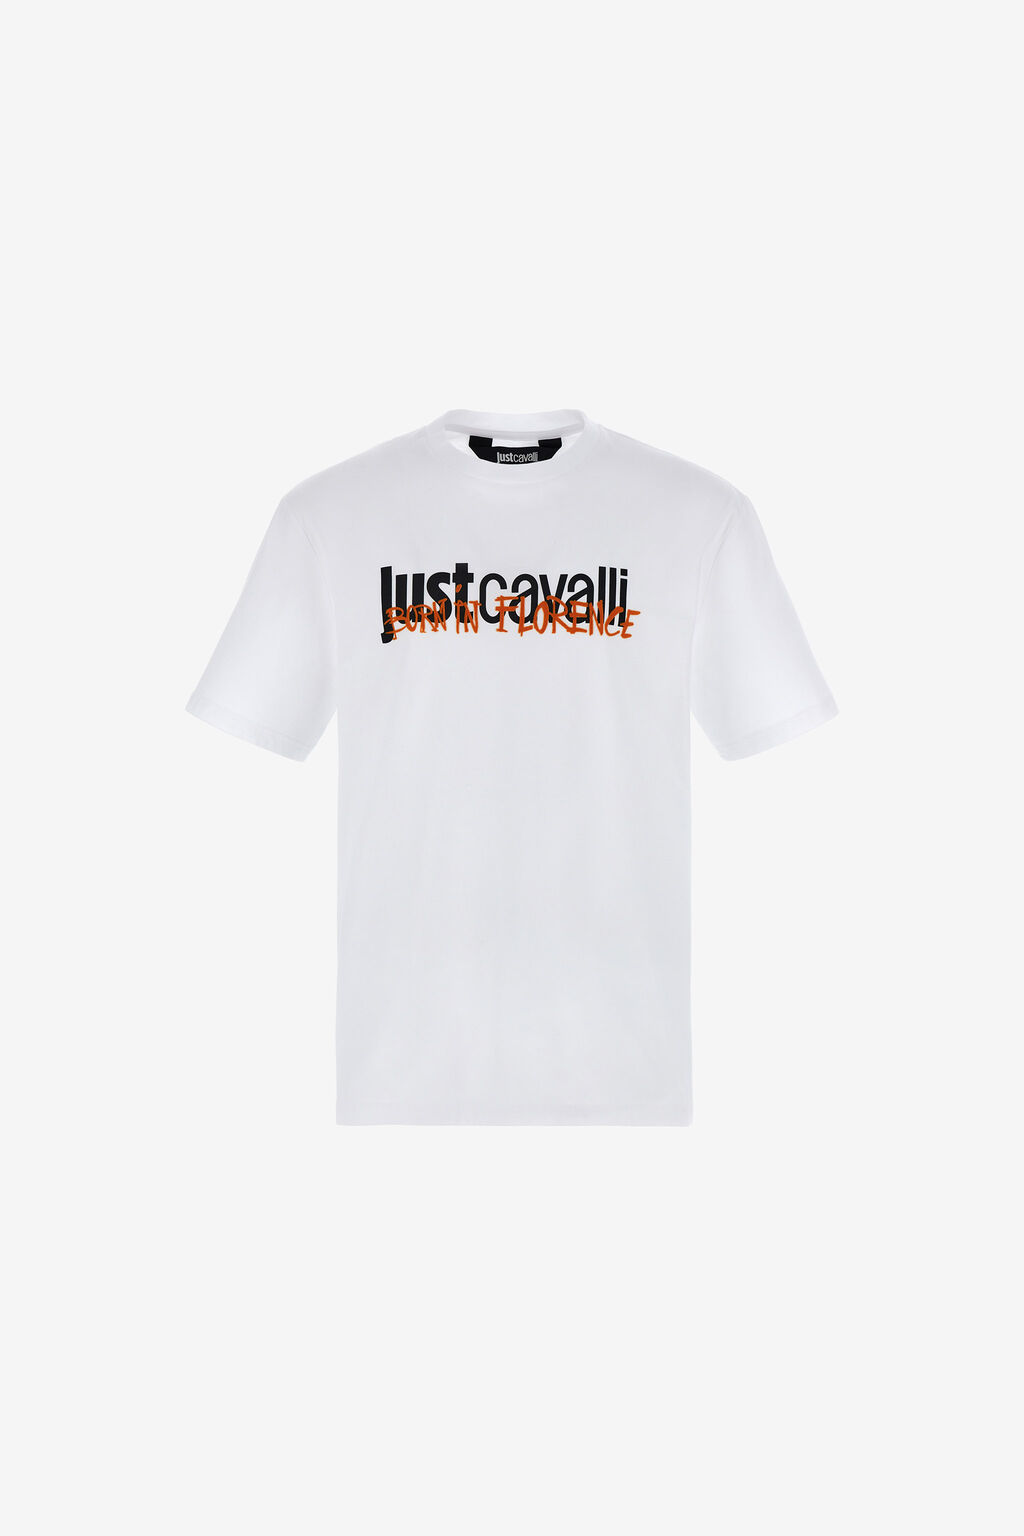 Just Cavalli 75Oahg04 Cj300 R Just Florence Flk T-Shirt White